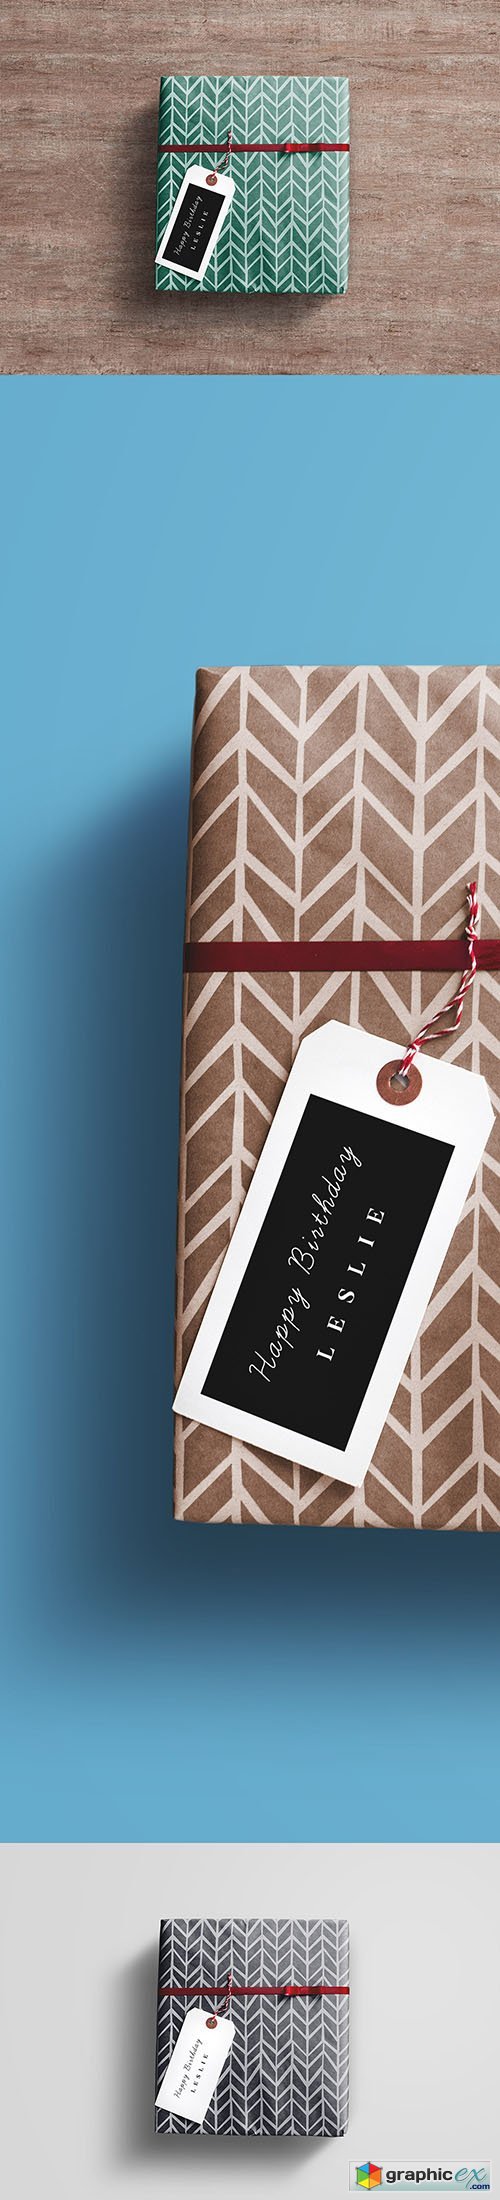 PSD Mock-Up - Gift Wrap Box